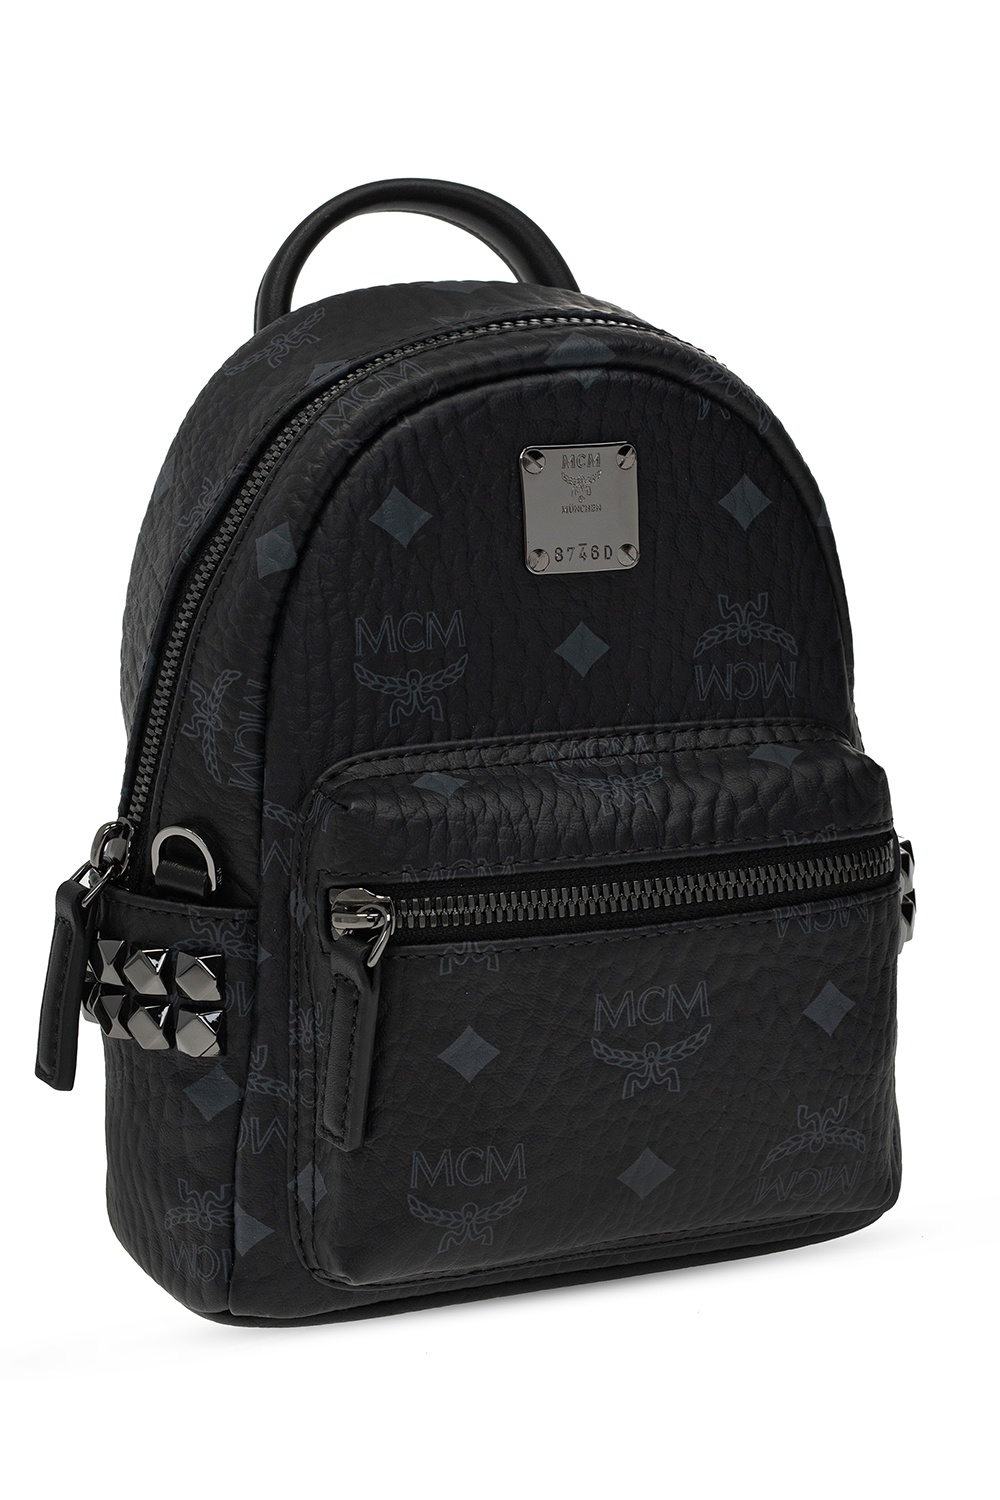 MCM Patterned typu backpack